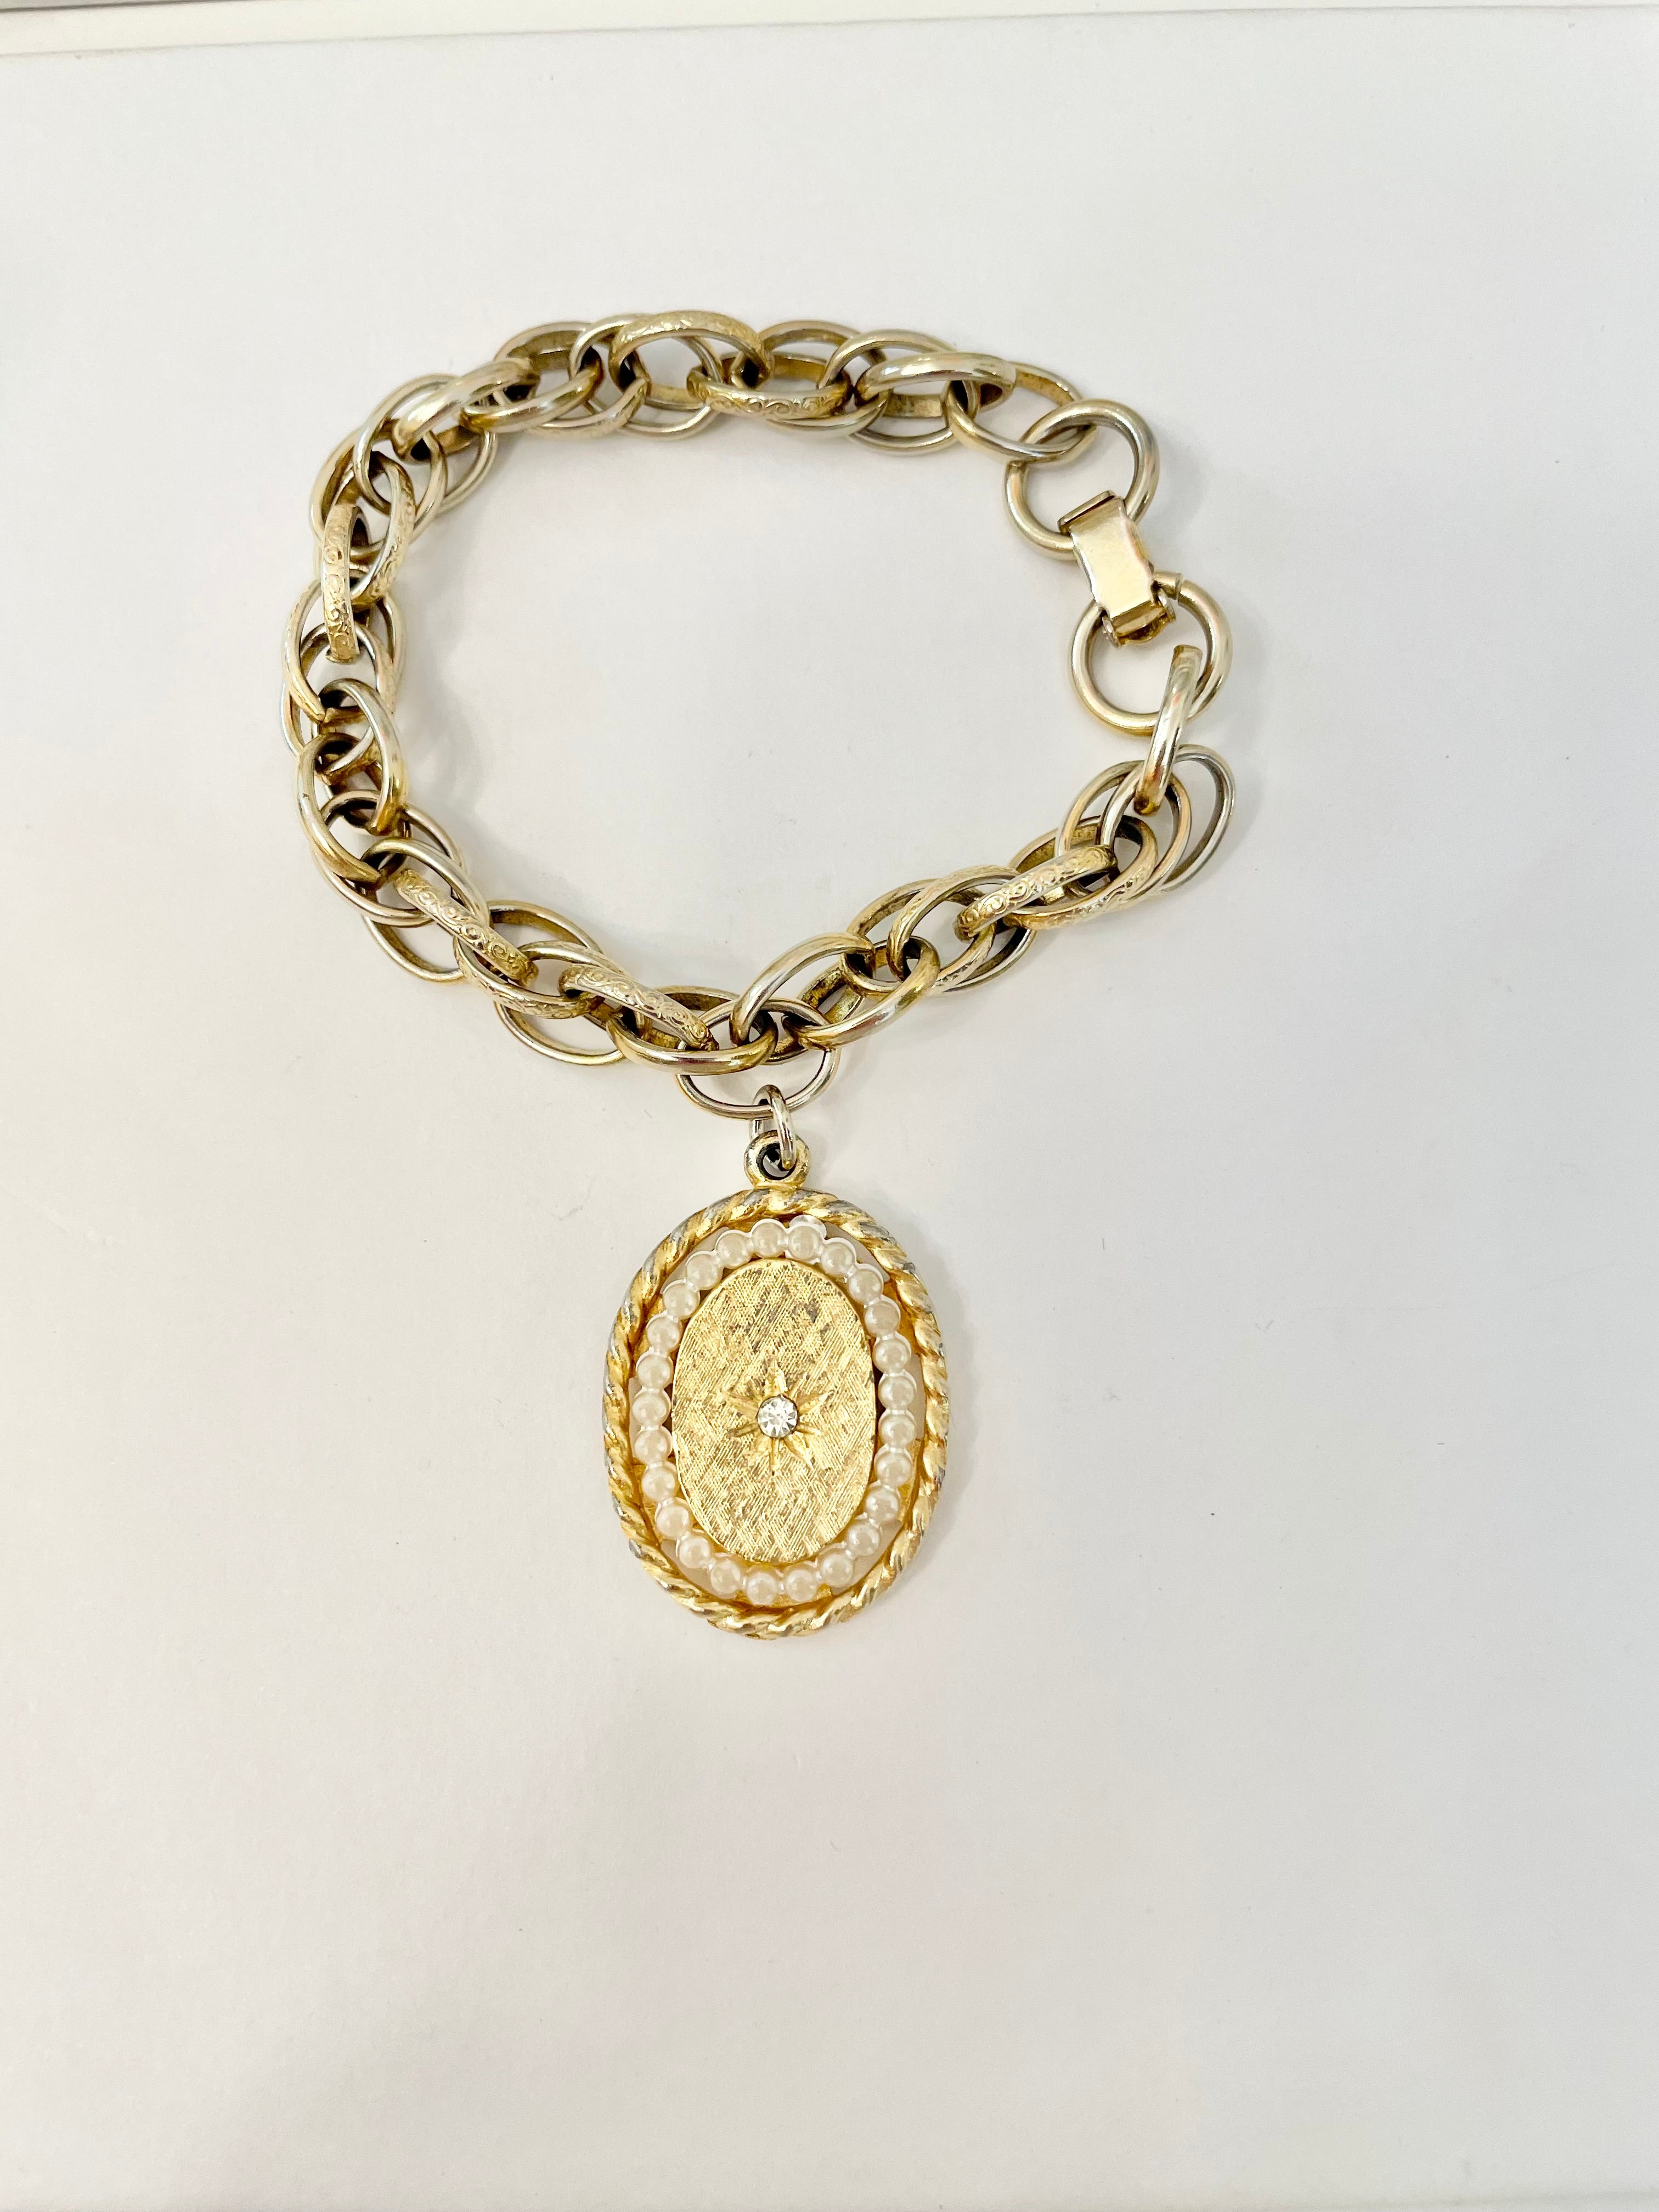 1960's truly divine charming bracelet....So classy!